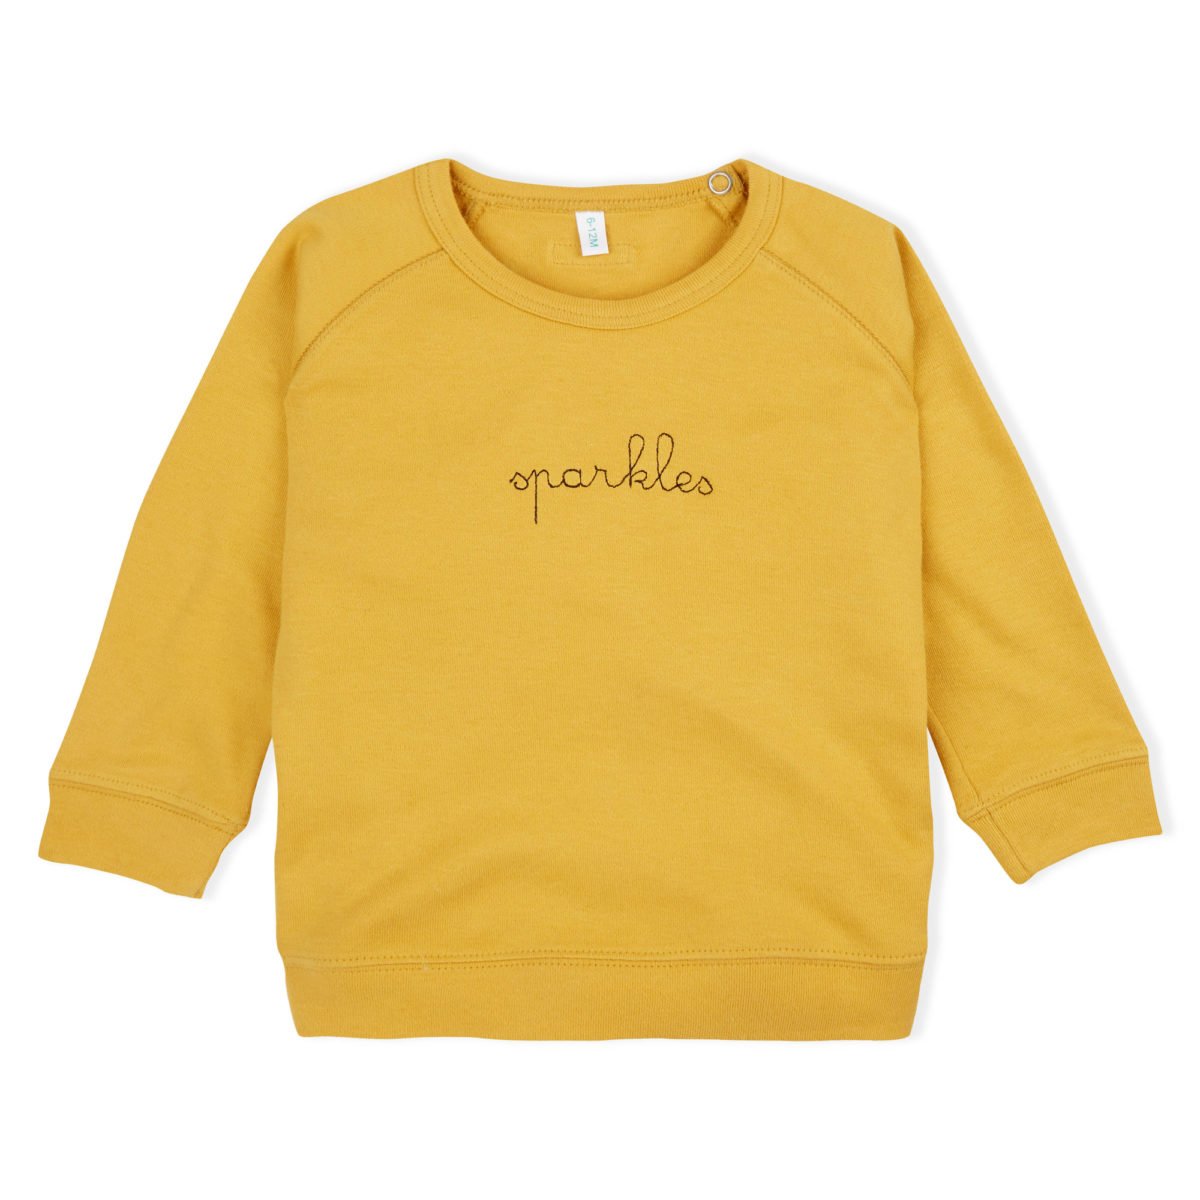 sweatshirt sparkles mustard